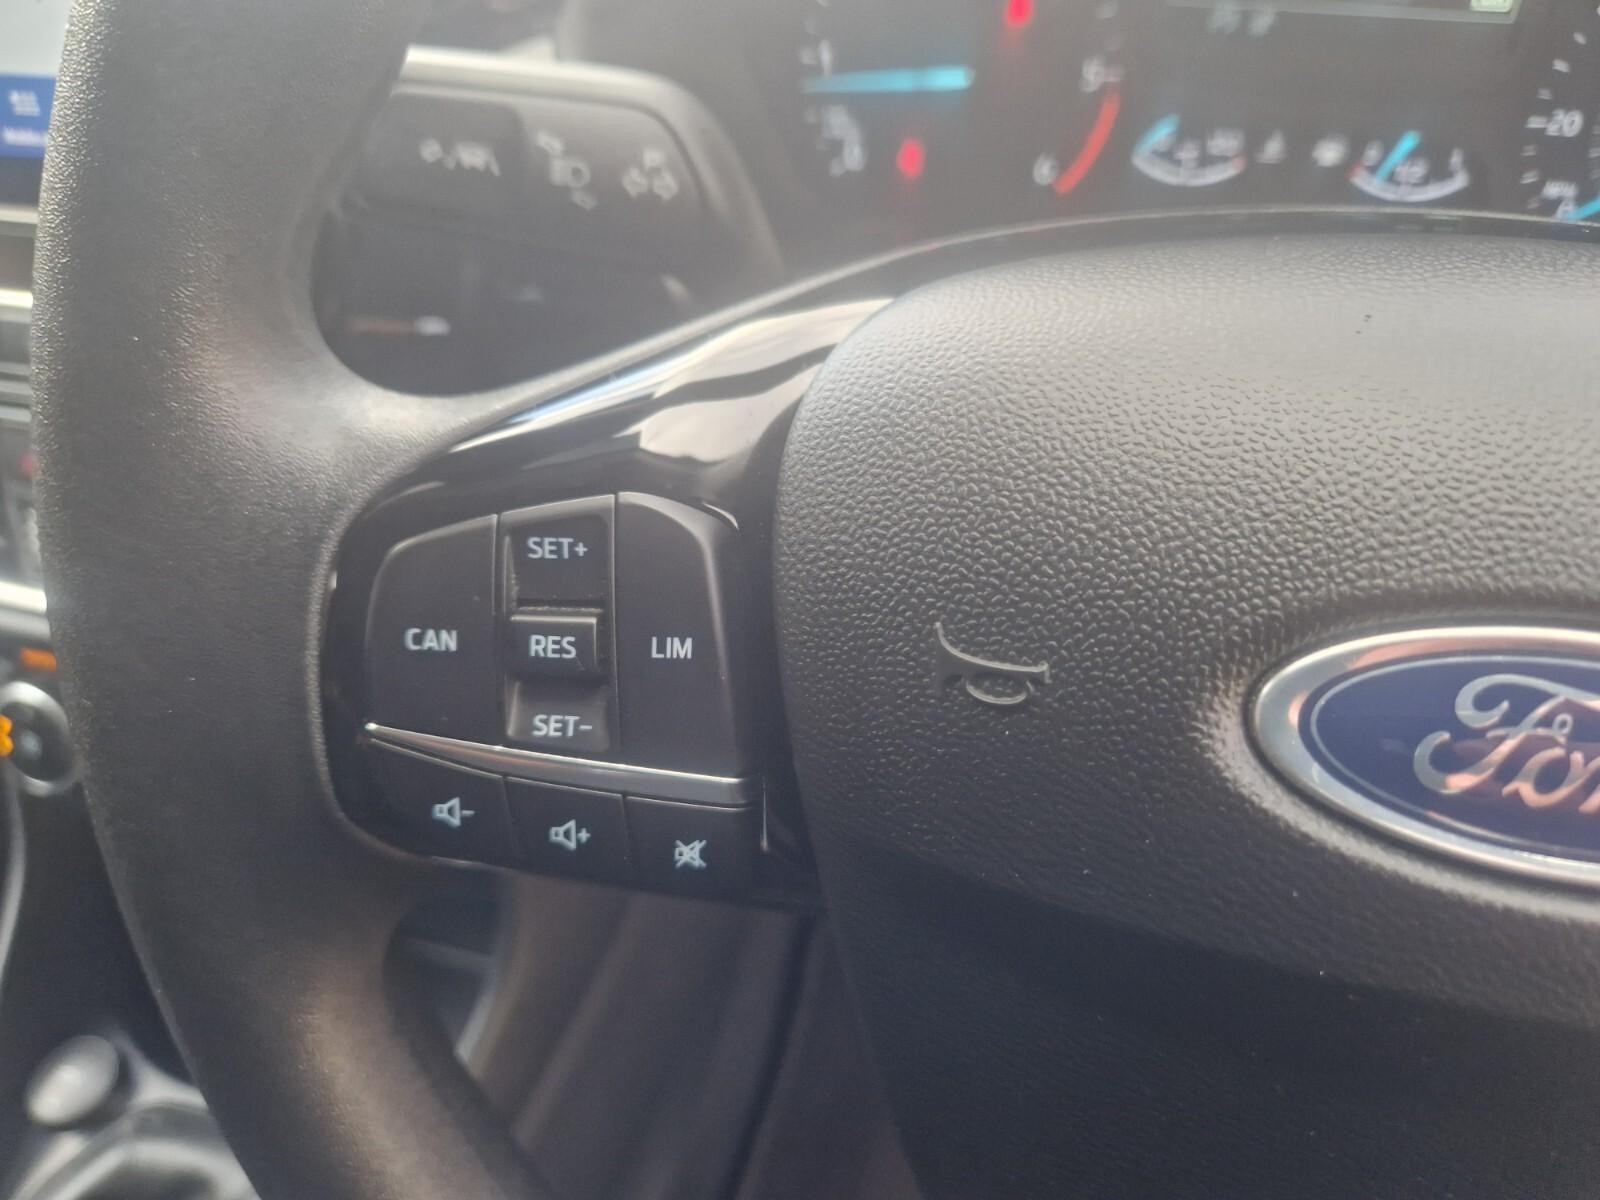 Ford Fiesta 1.5 TDCi Trend Navigation 5dr (AE70LGU) image 21